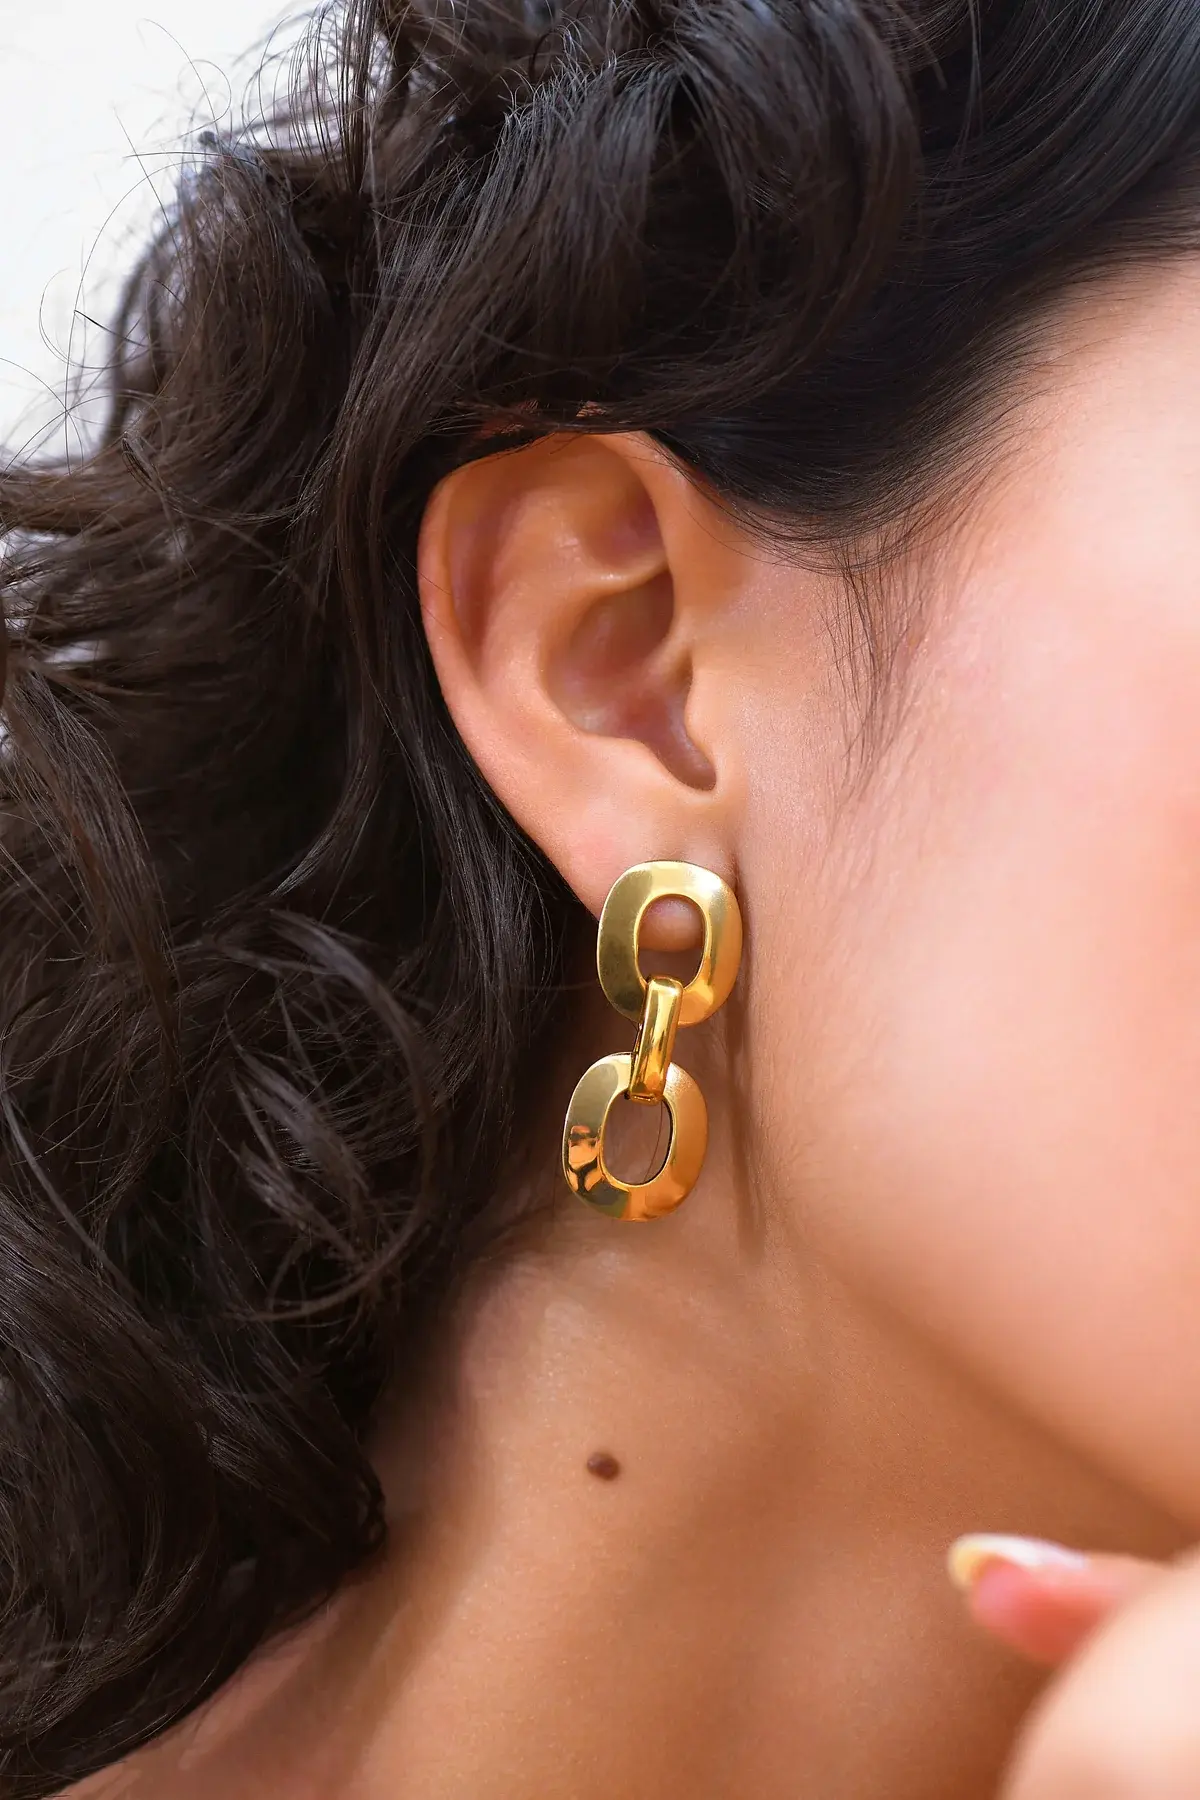 Buy Dainty Stud Earrings Gold Chain Earrings Short Chain Earrings Unique  Minimalist Earrings Best Gift for Her STD077 Online in India - Etsy